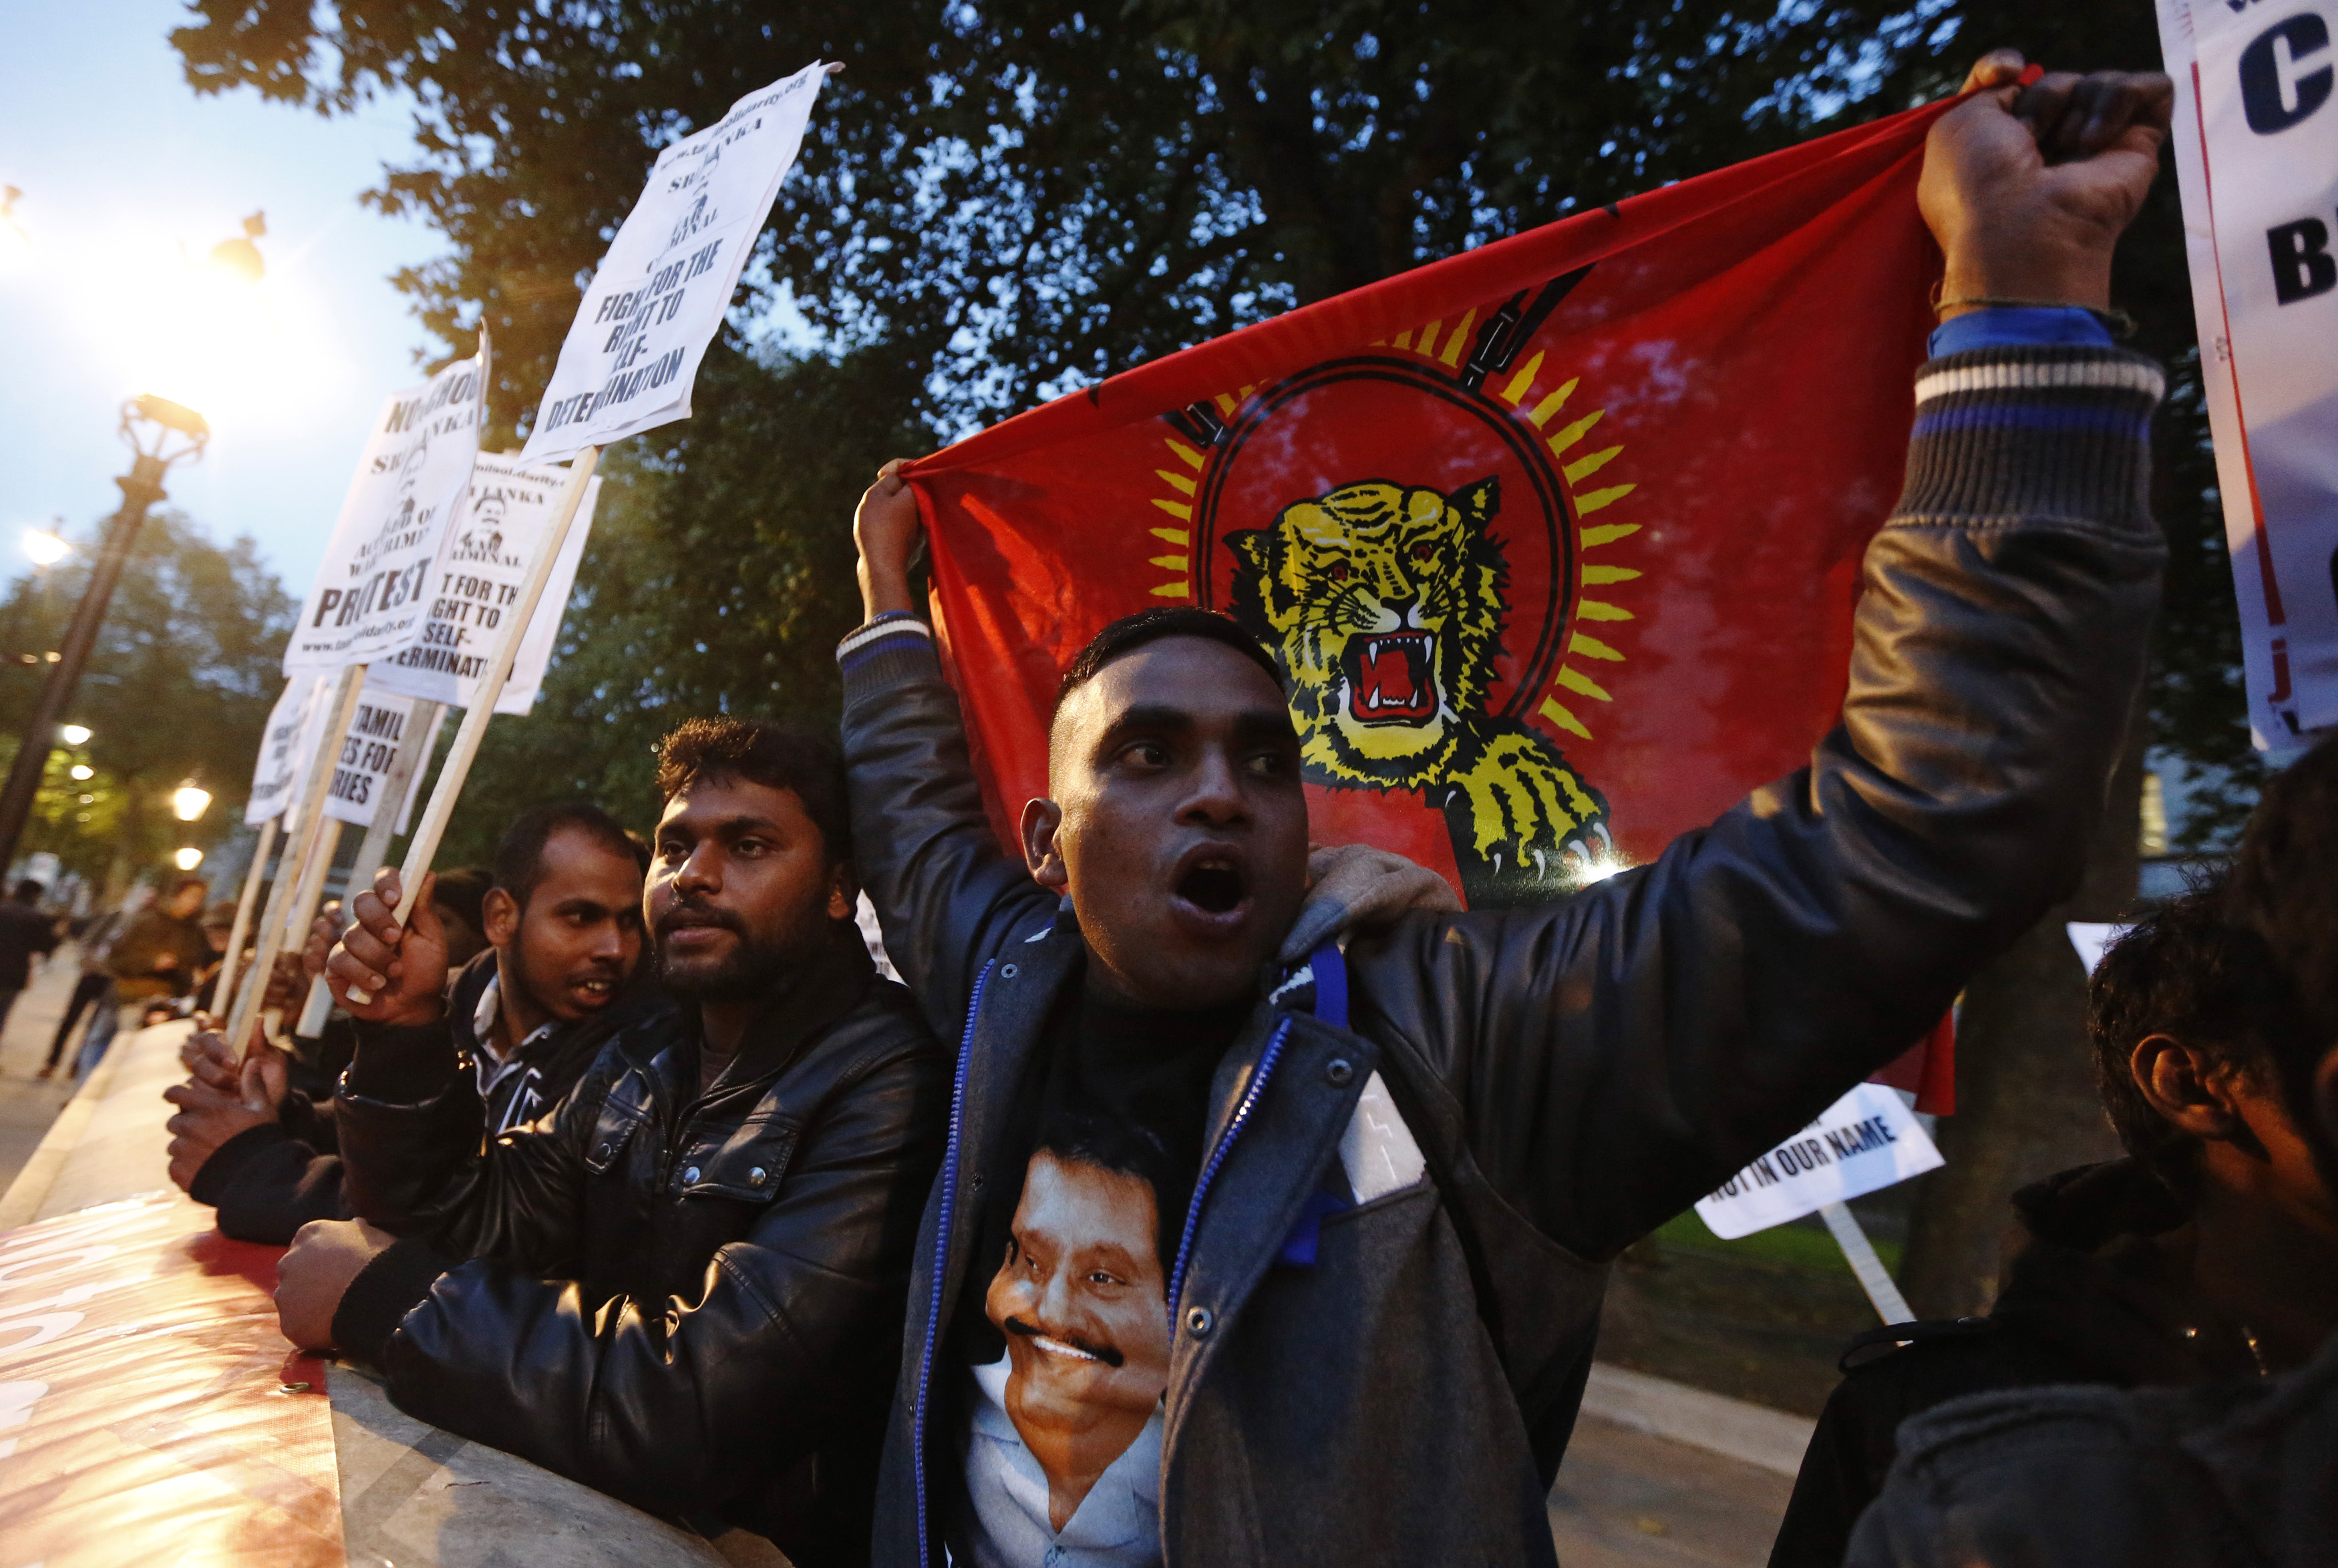 Tamil demonstratorsprotest Sri Lanka's human rights record outside Downing Street in  London in November  2013. (© Luke MacGregor / Reuters&mdash;REUTERS)